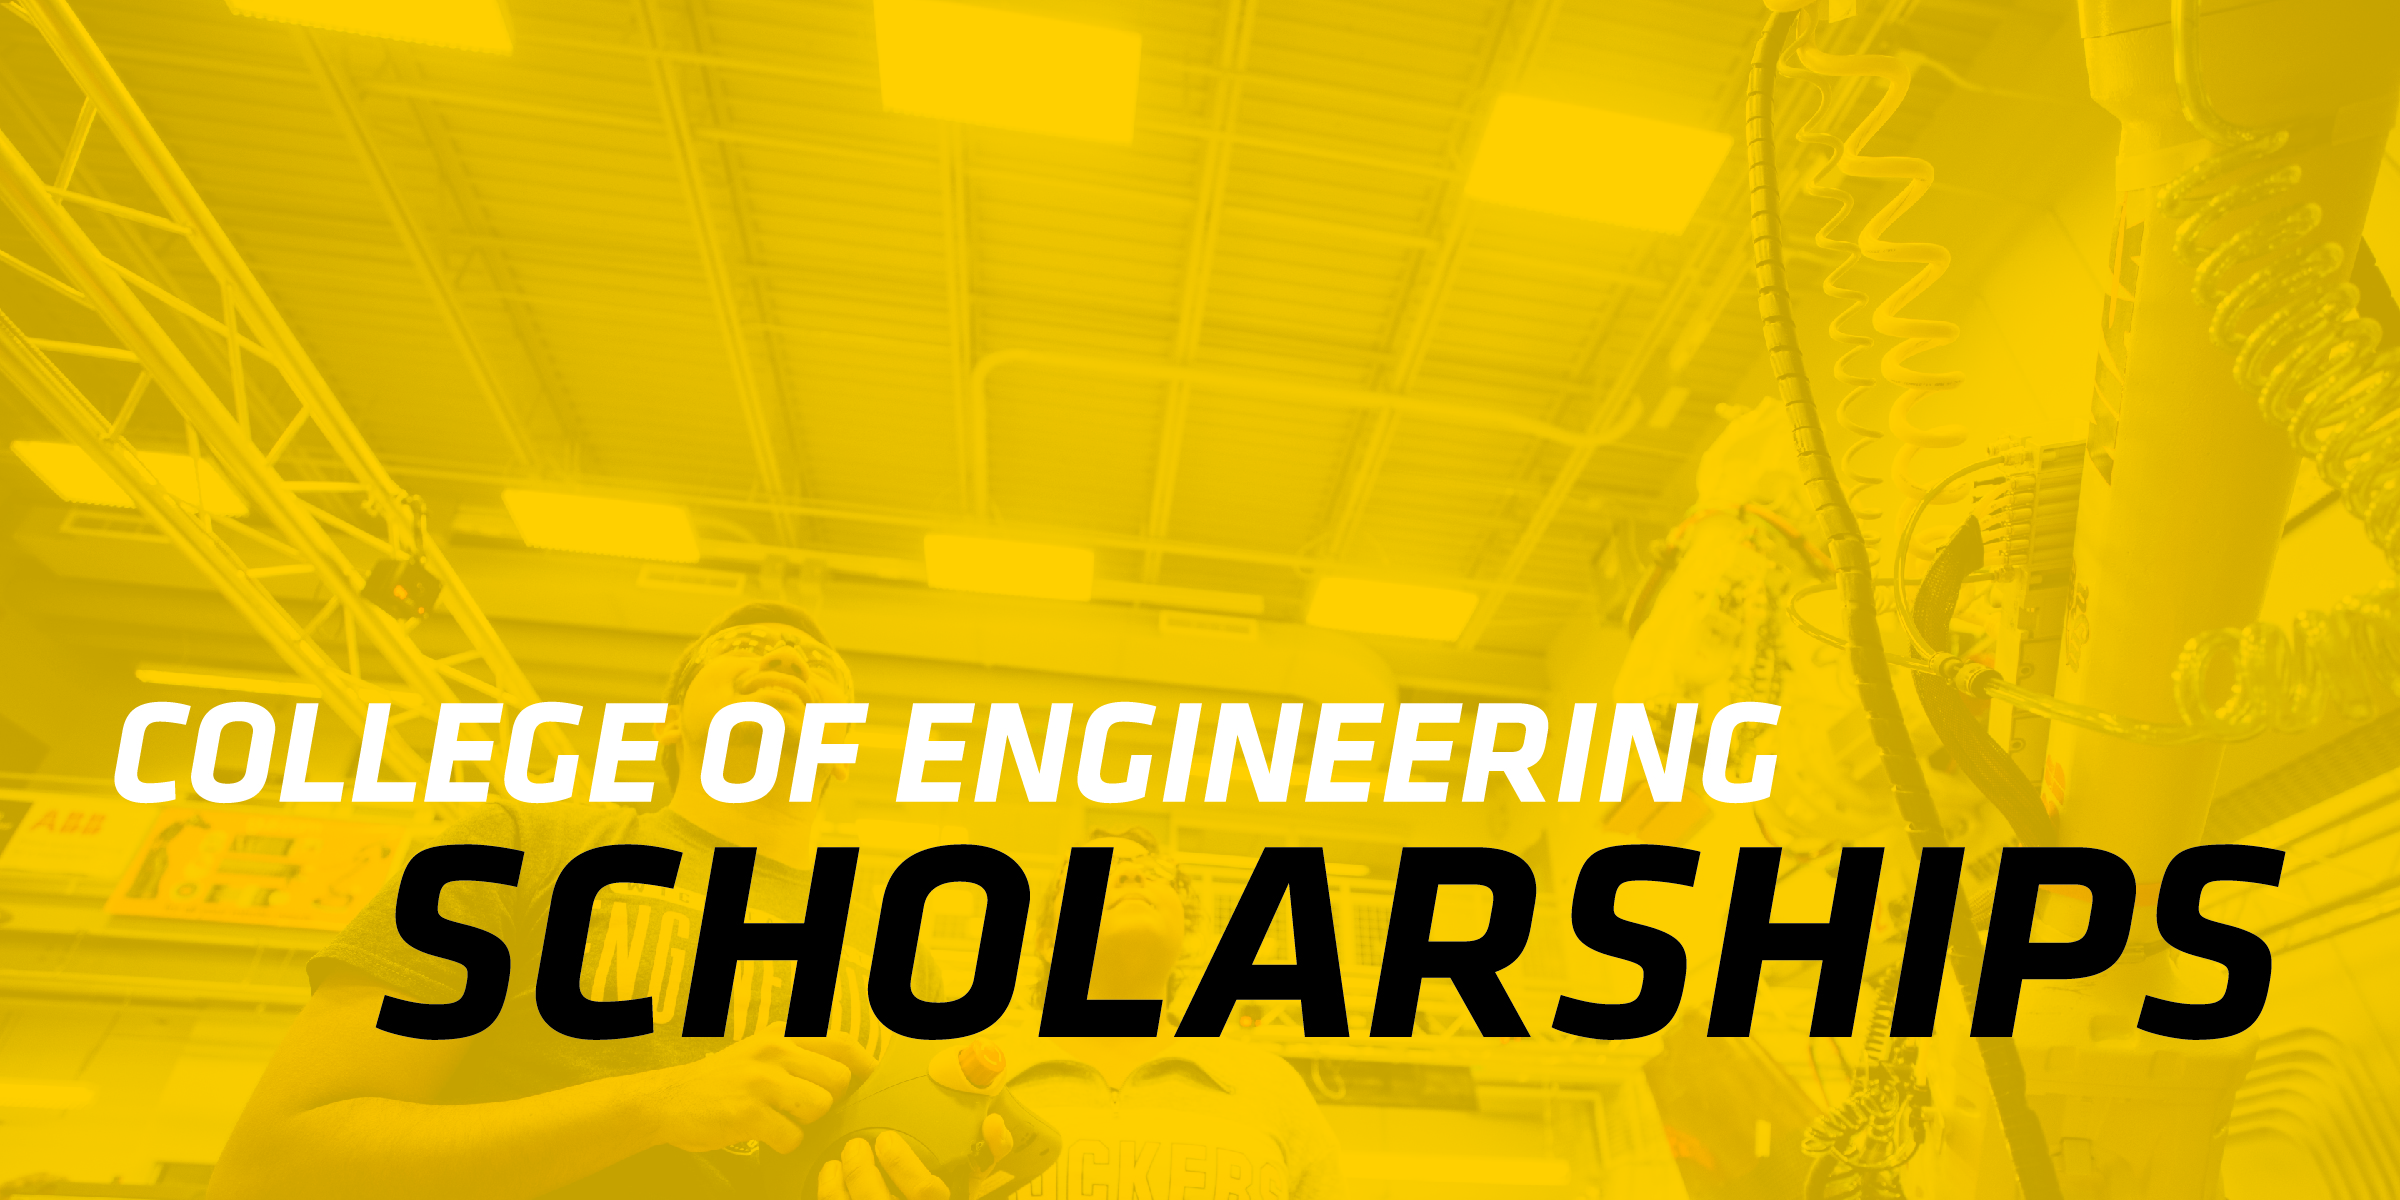 College of Engineering Scholarships